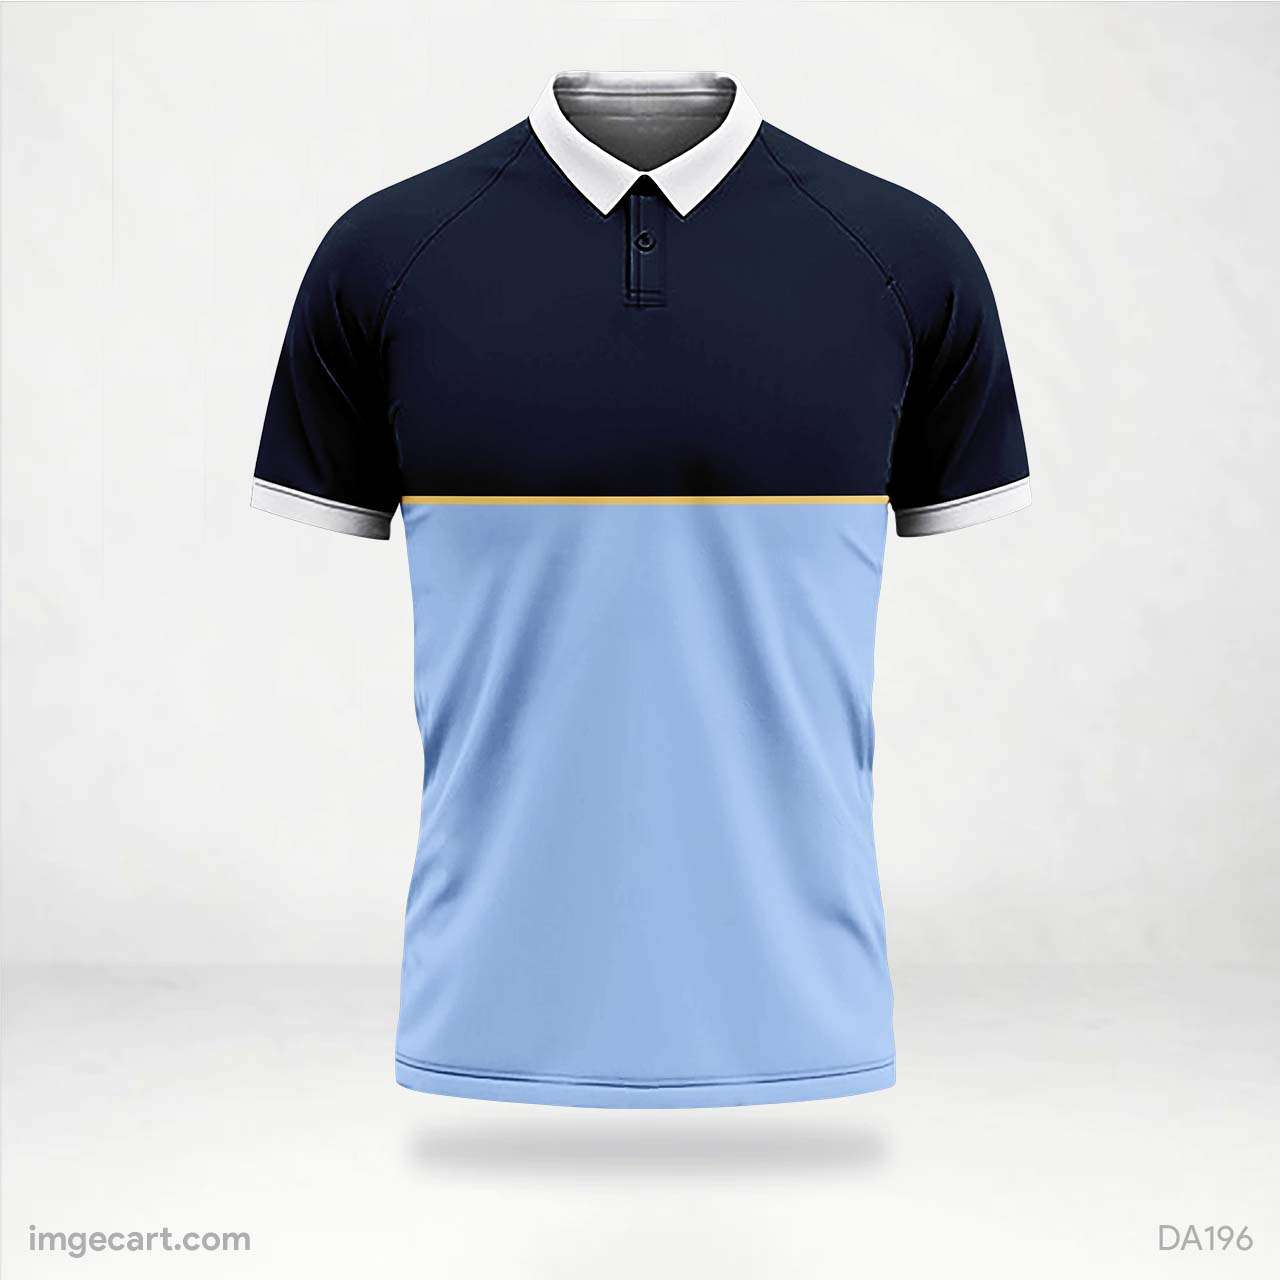 Cricket Jersey Design Blue Combination - imgecart